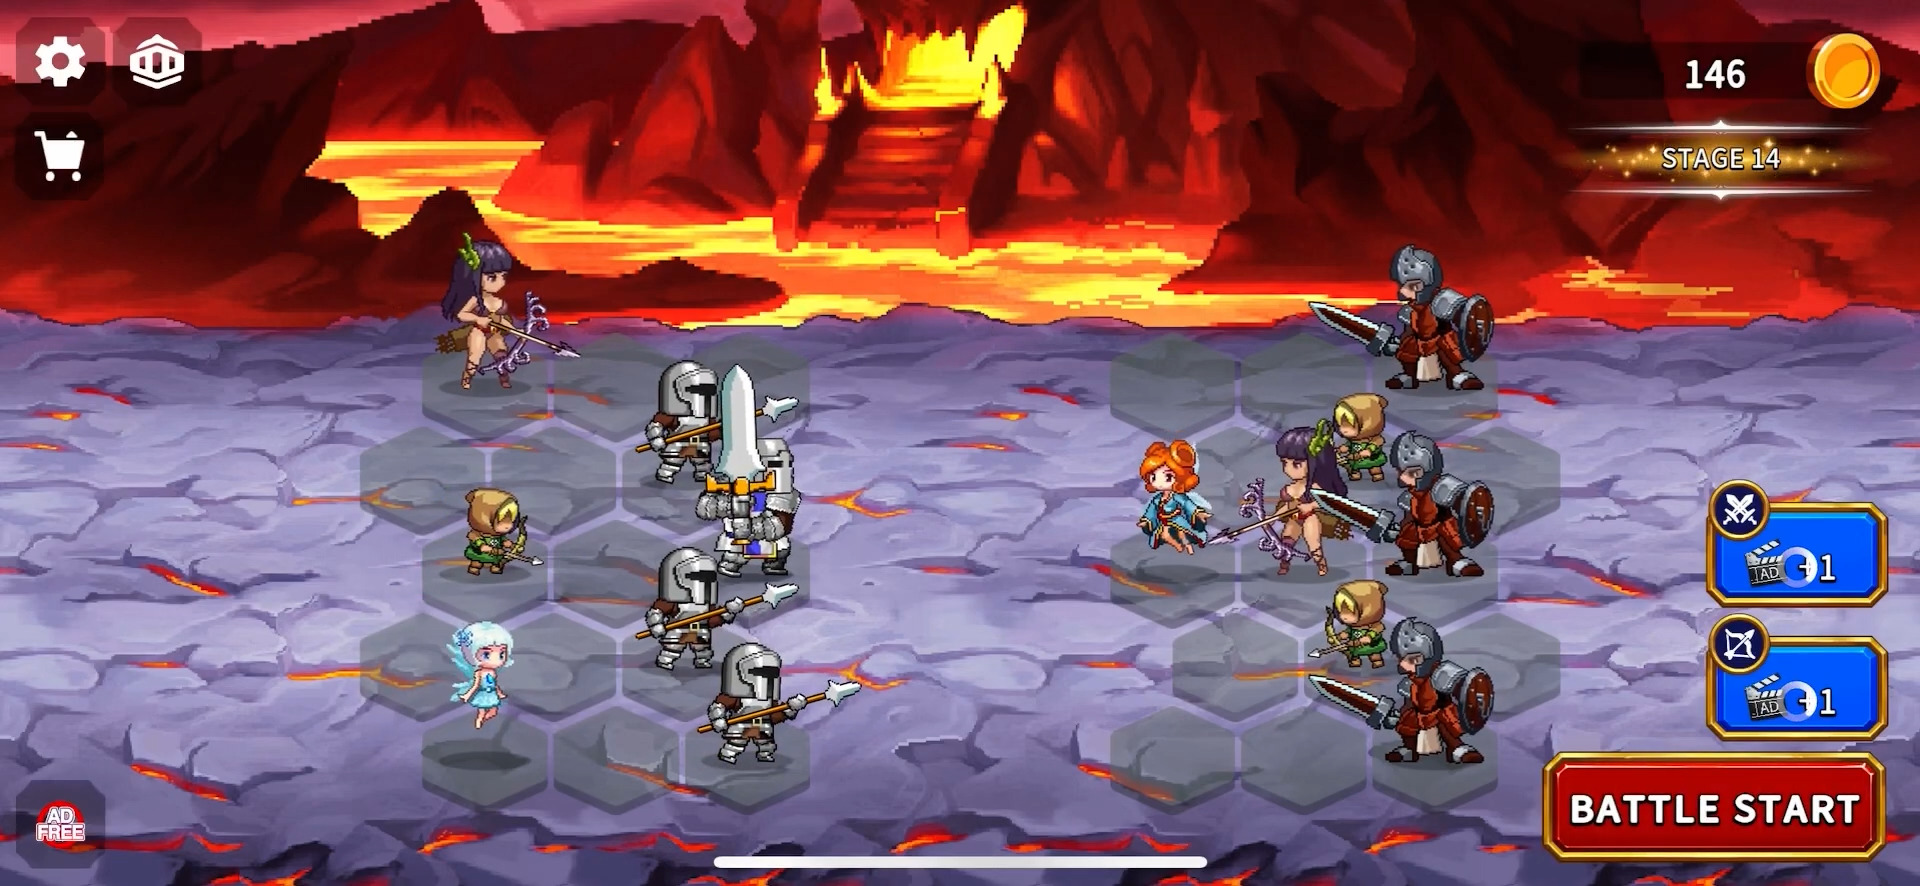 Kingdom Wars Merge - Android game screenshots.